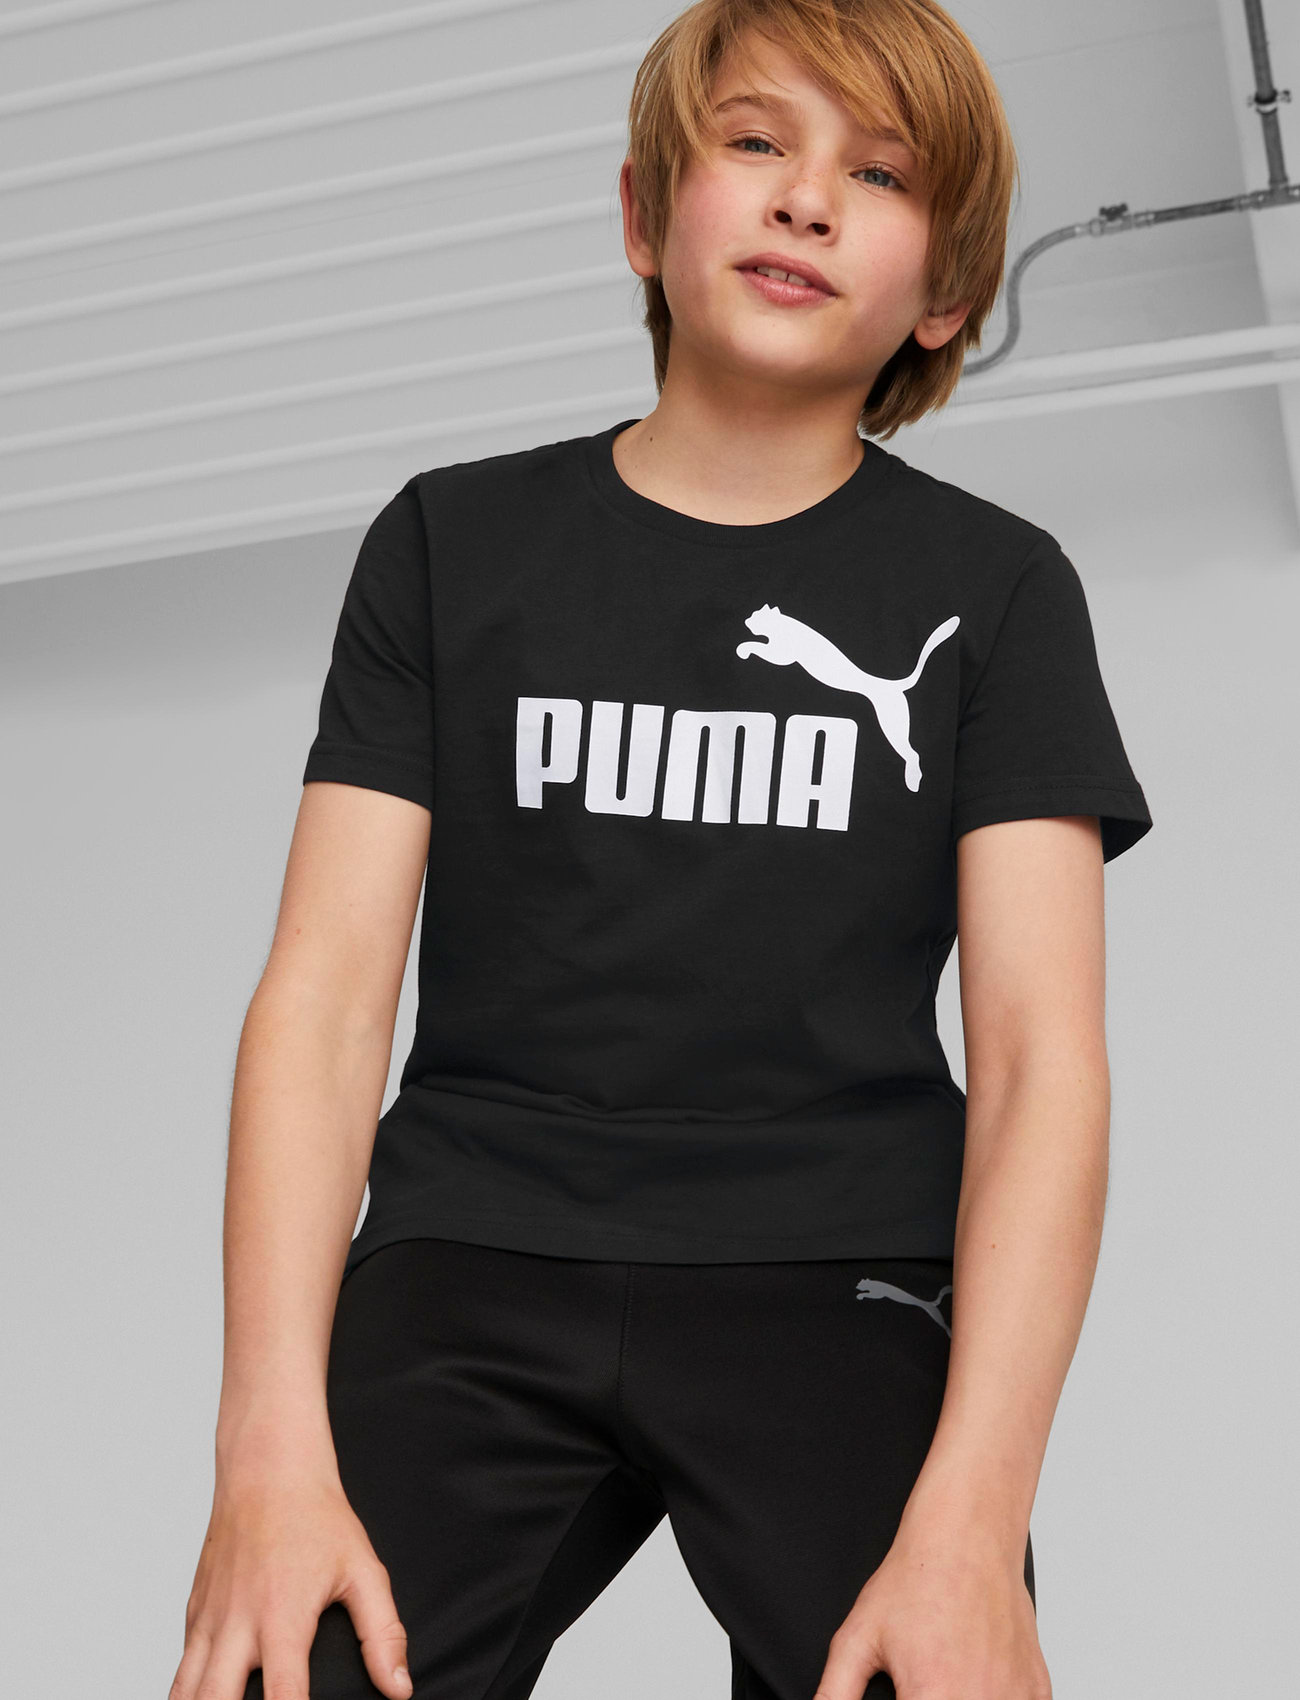 Tee PUMA - Short-sleeved Logo B Ess